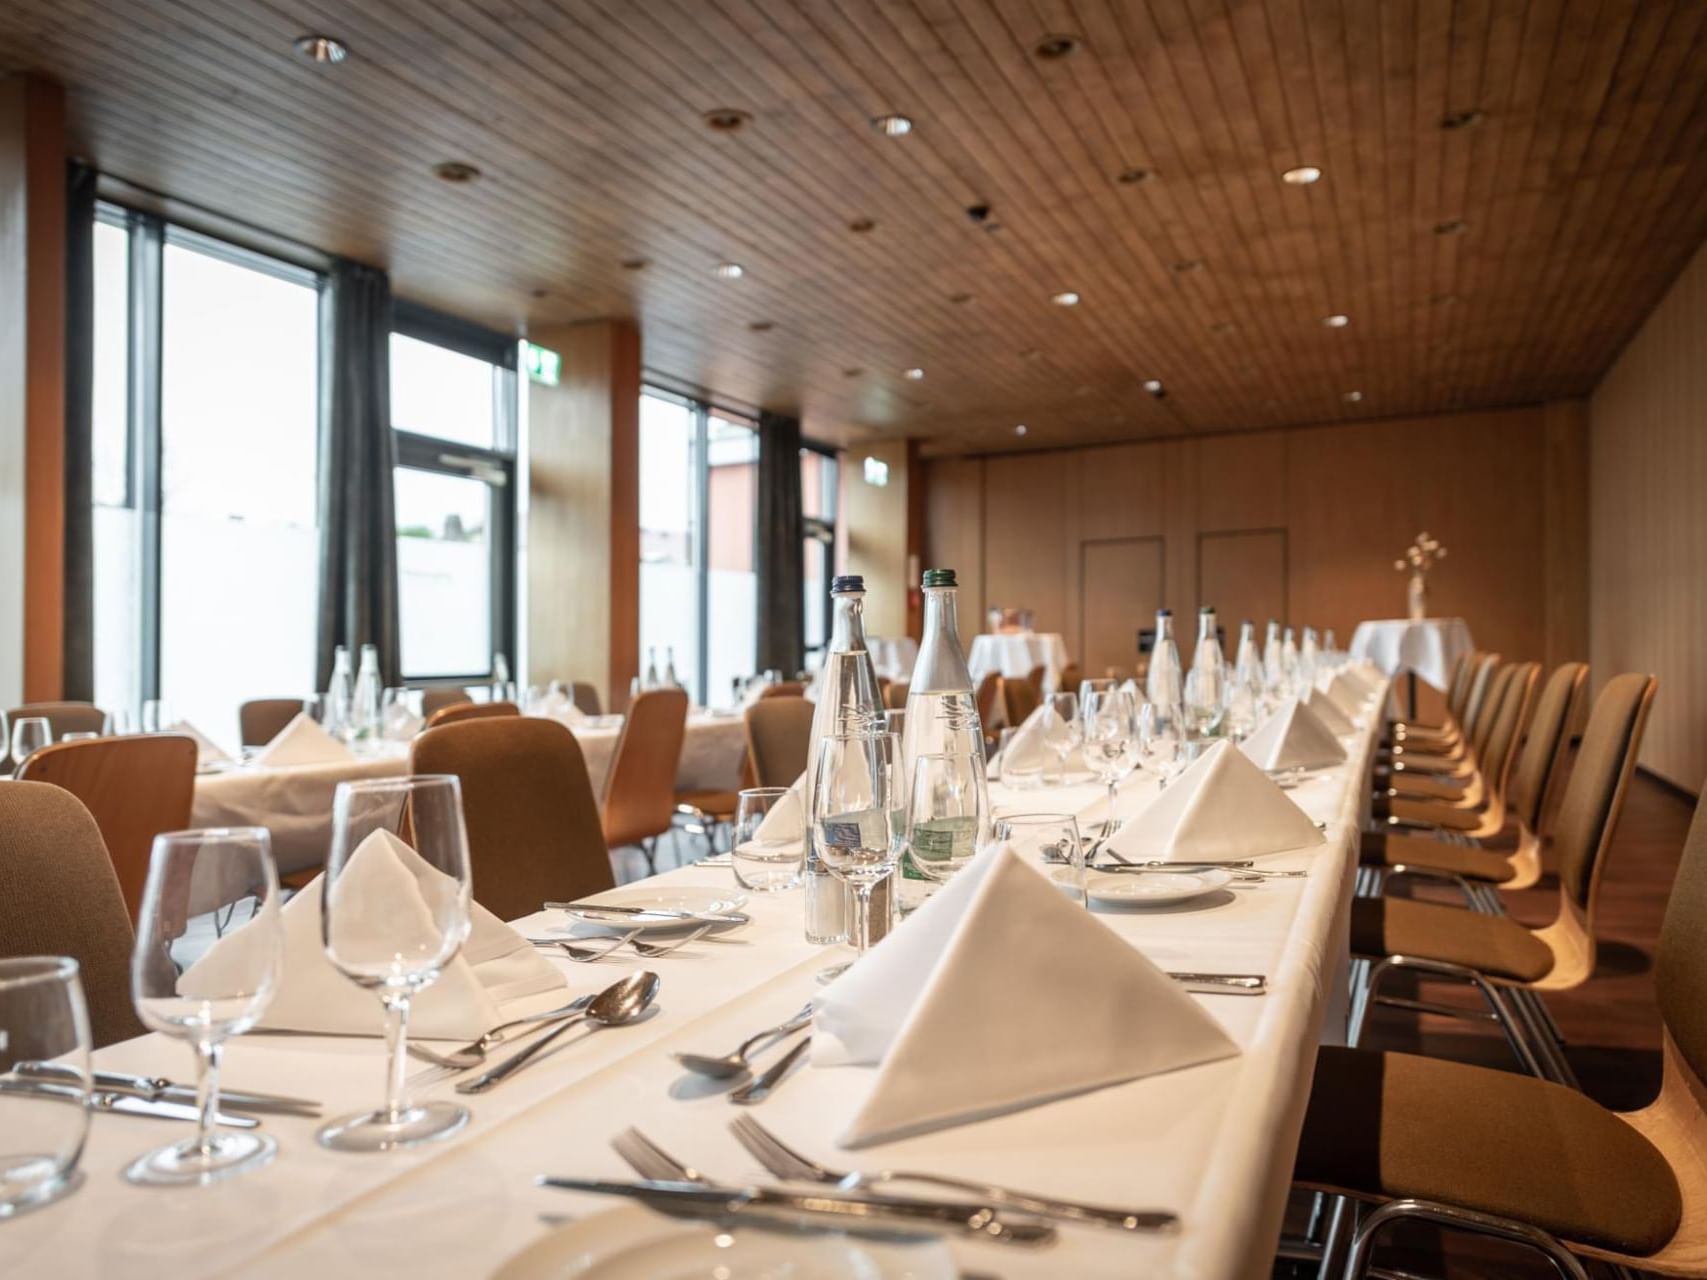 Dining table set-up in Uetlisaal at Best Western Hotel Spirgarten​​